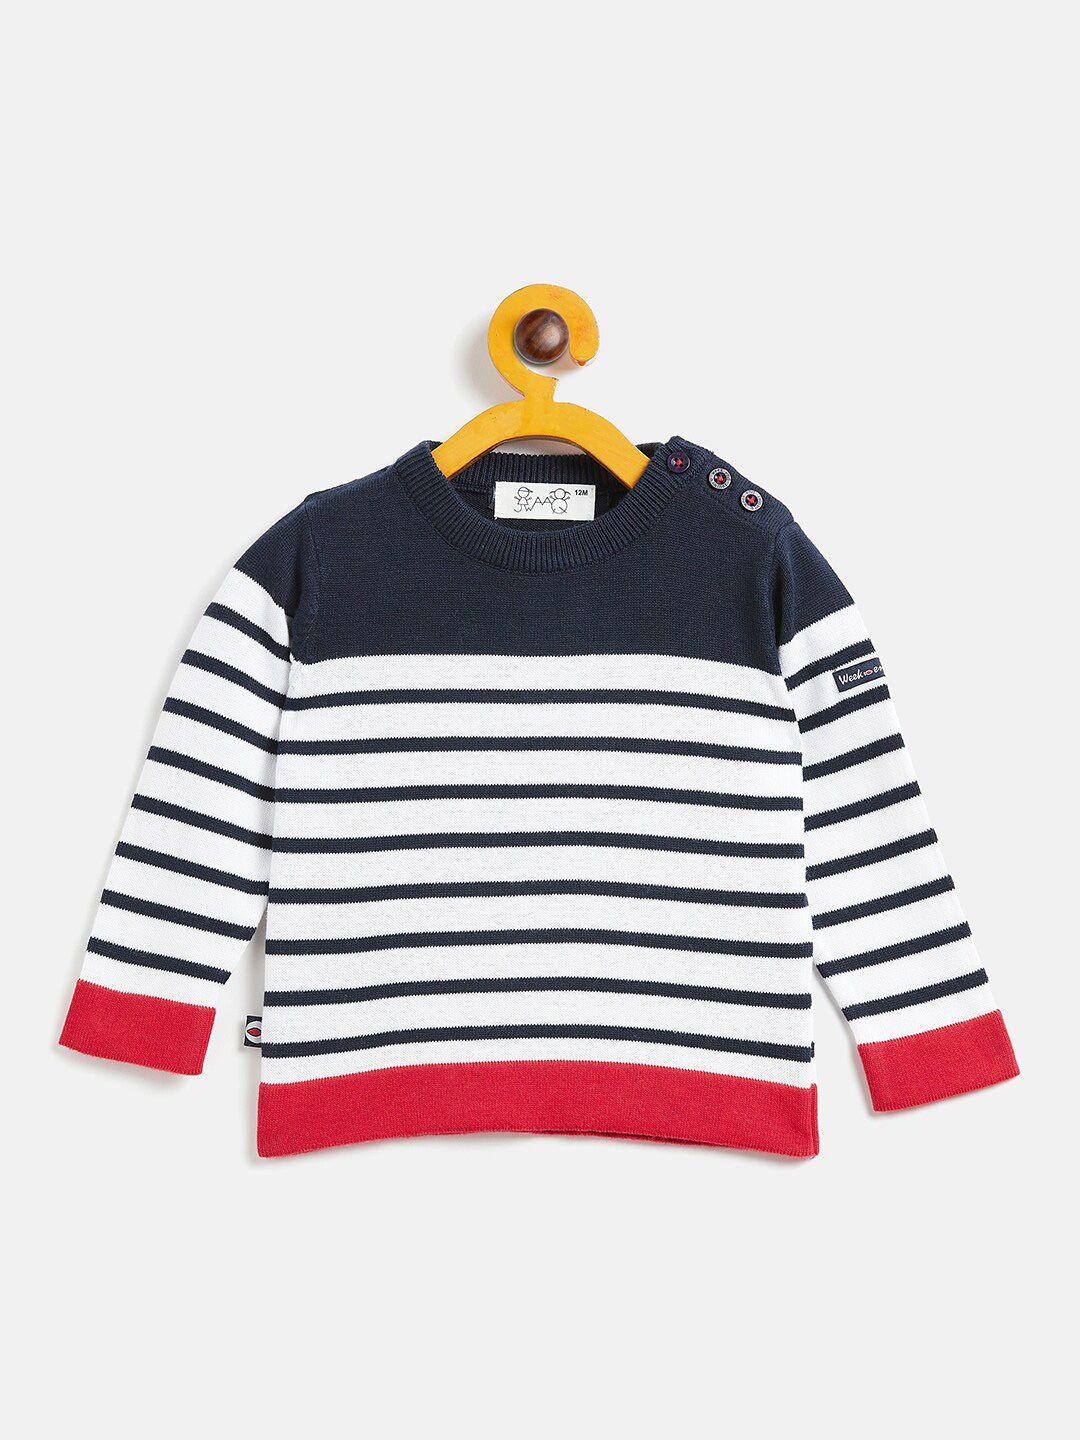 jwaaq unisex kids black & white striped pullover